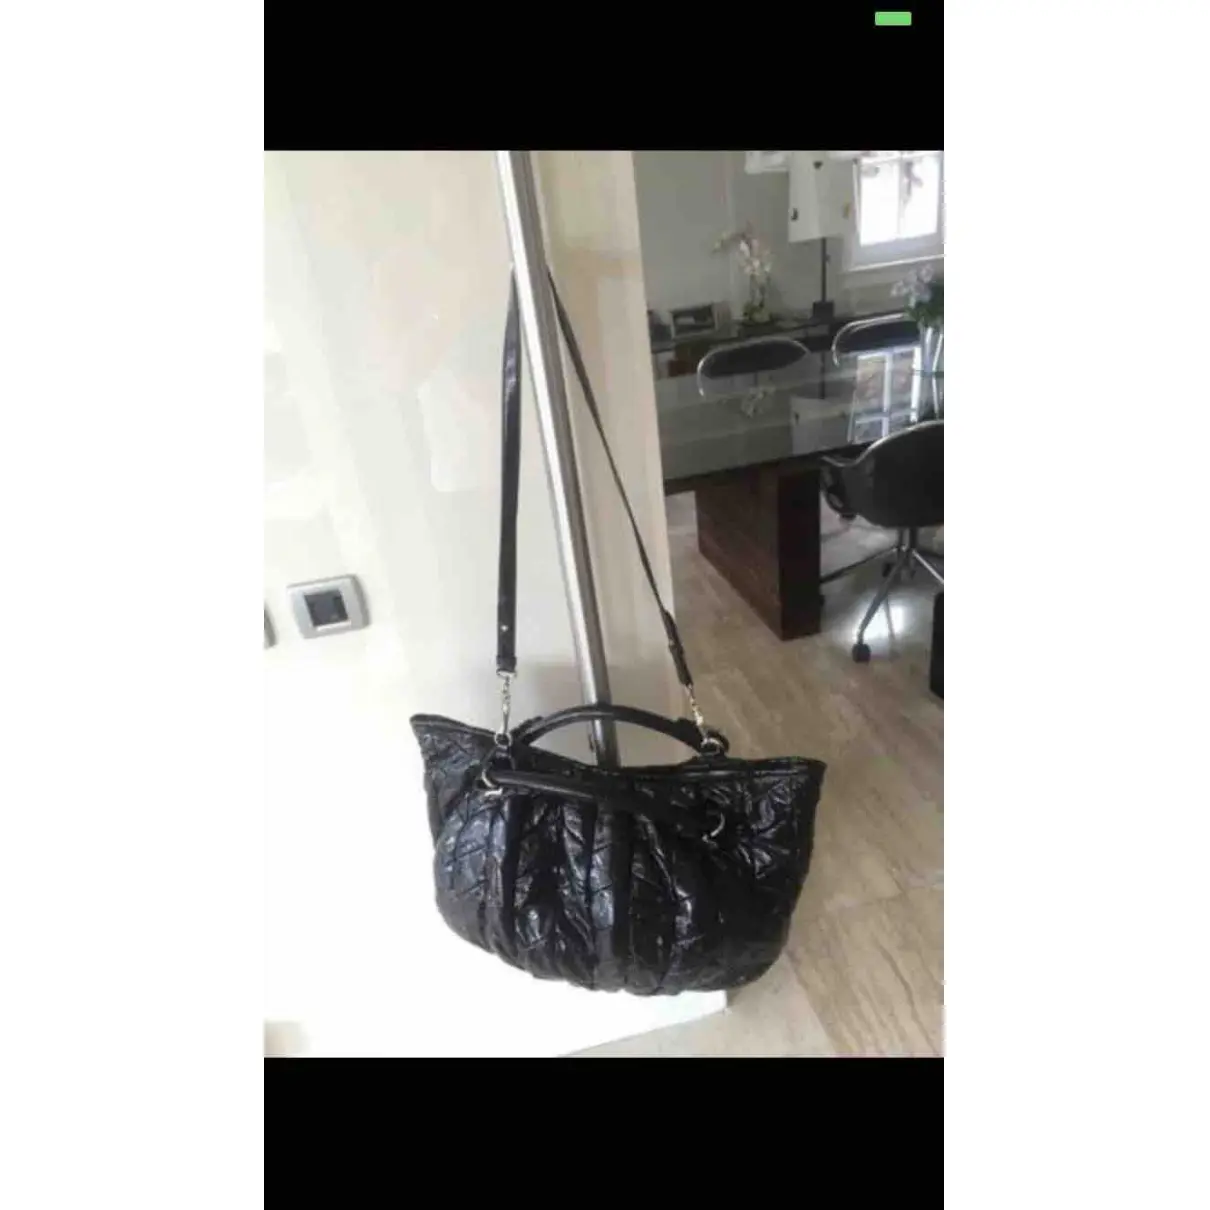 Miu Miu Leather handbag for sale